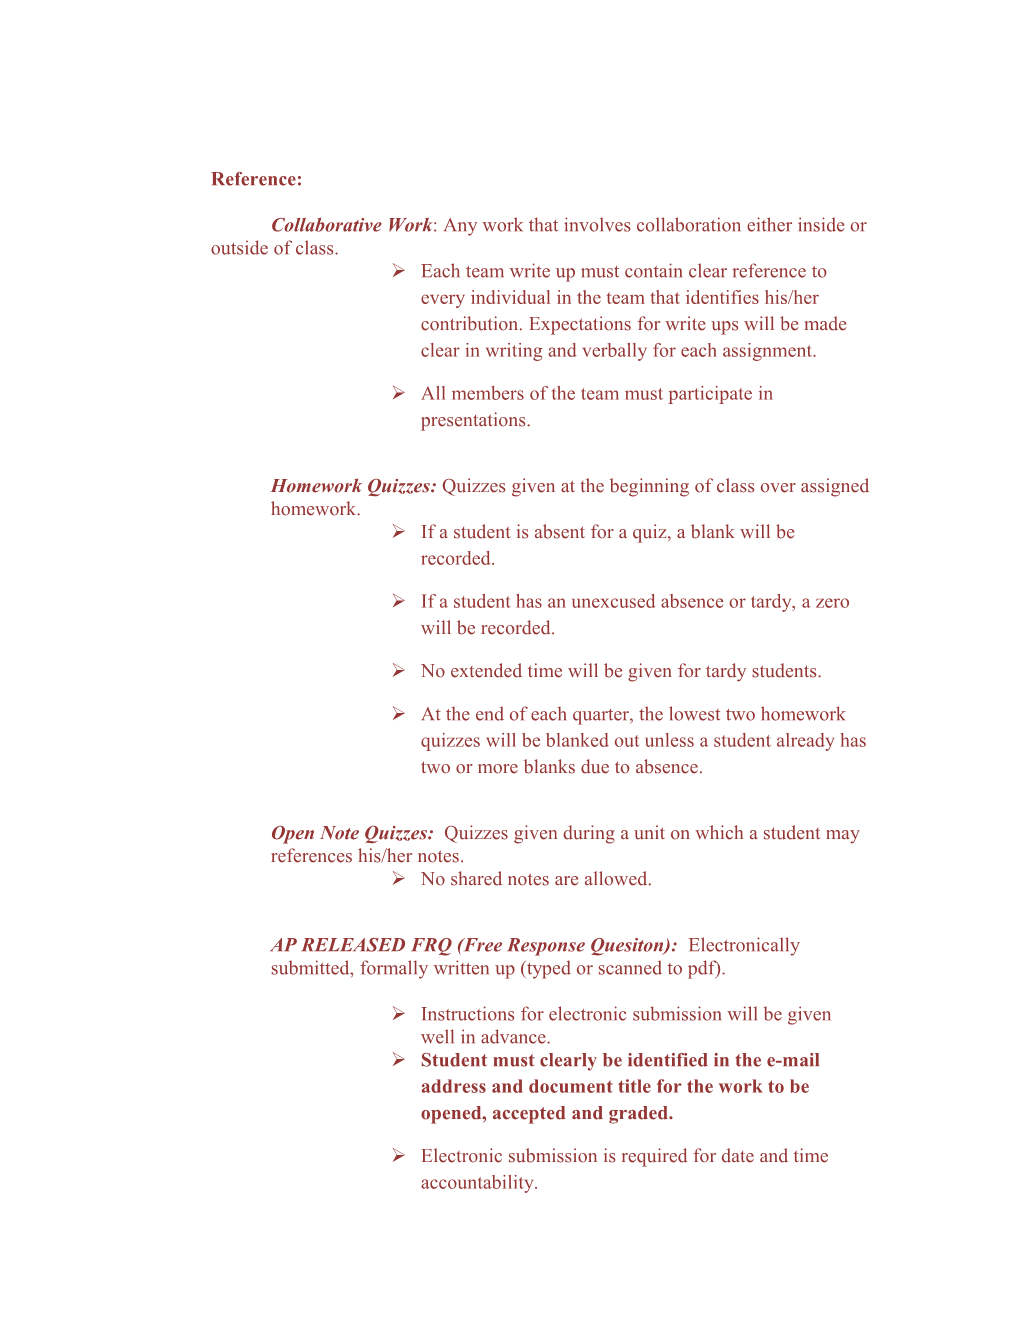 Course Description and Objectives